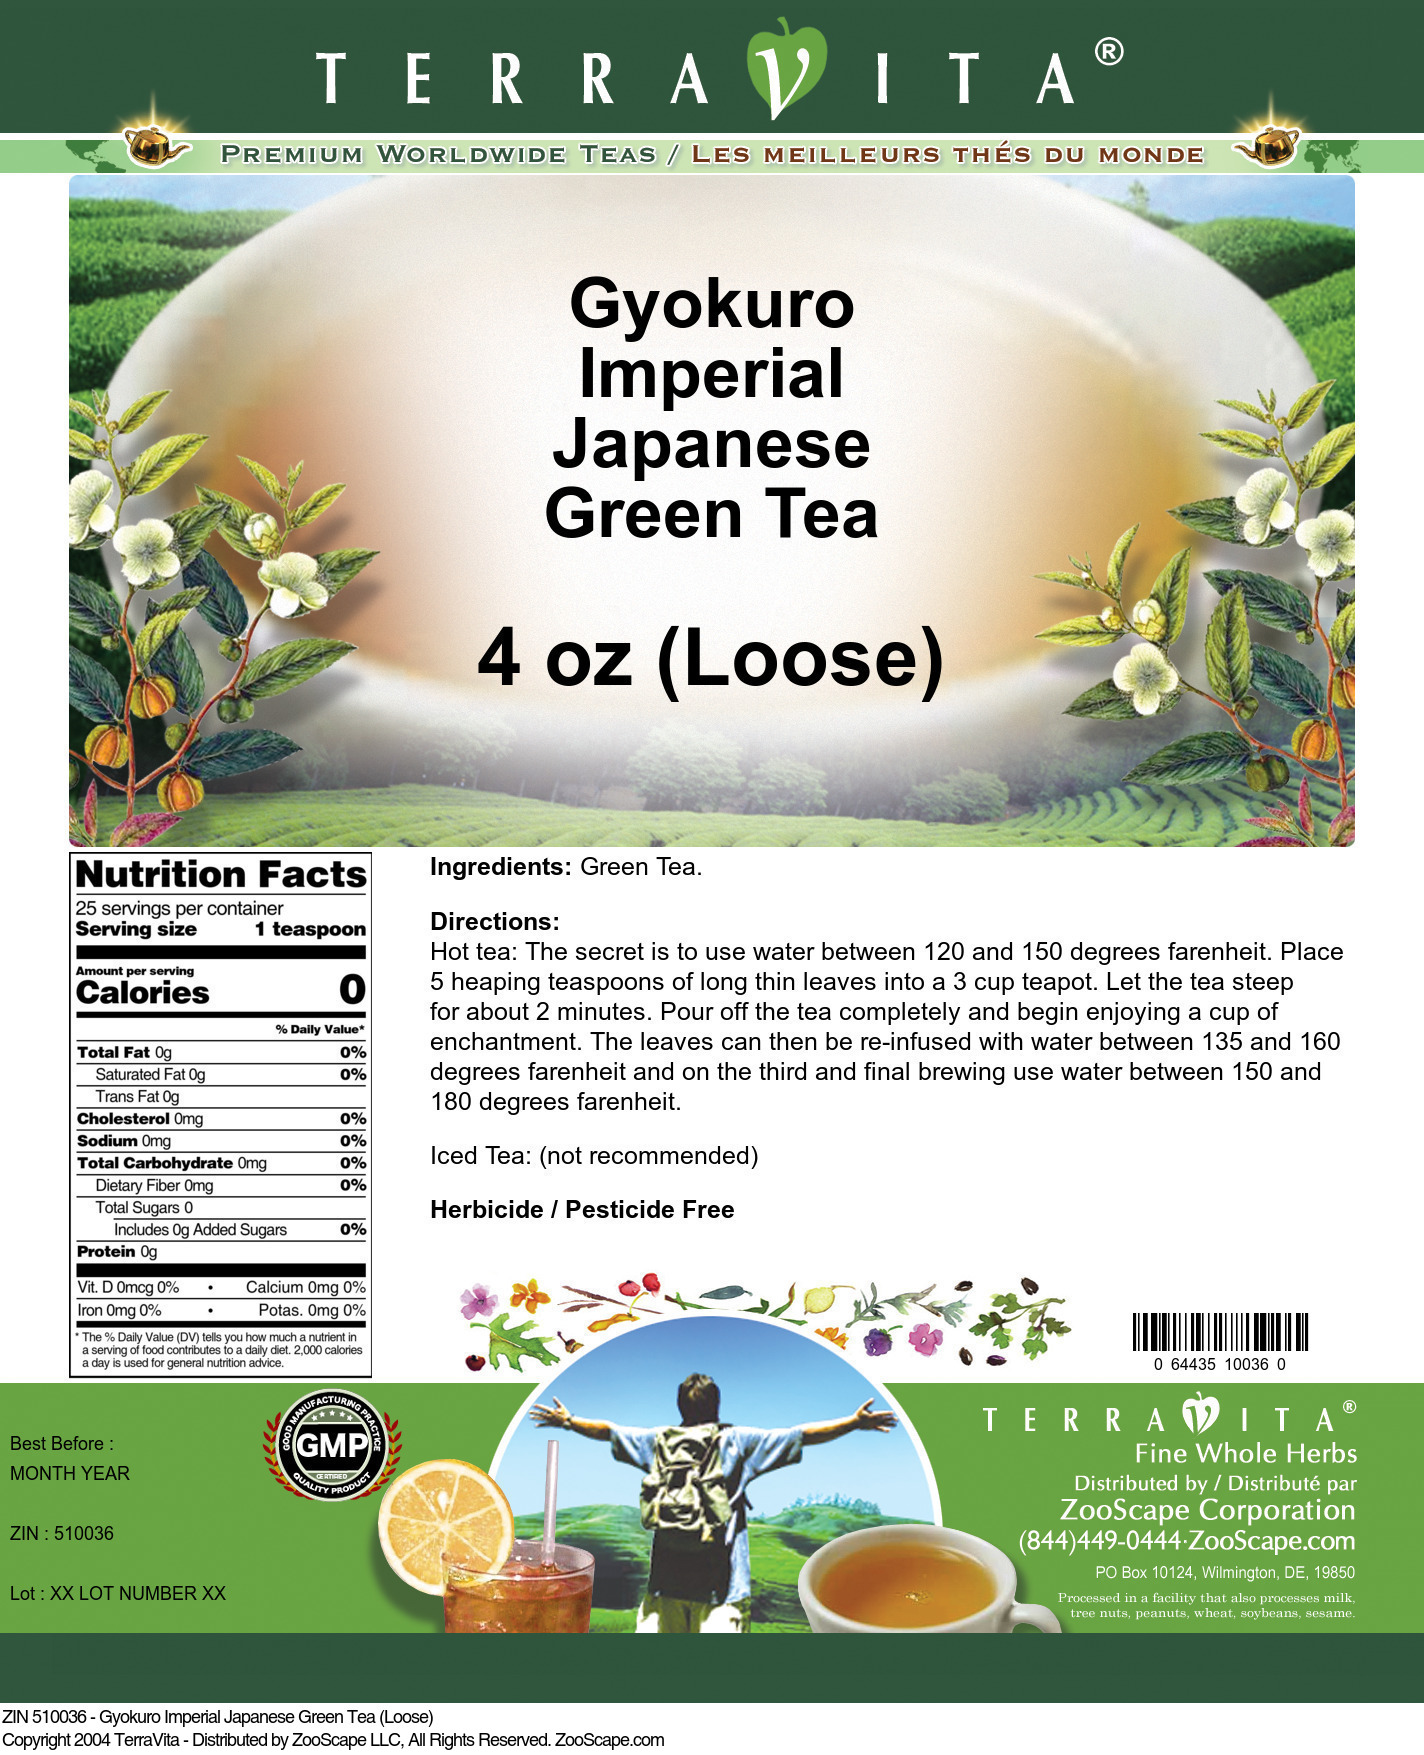 Gyokuro Imperial Japanese Green Tea (Loose) - Label